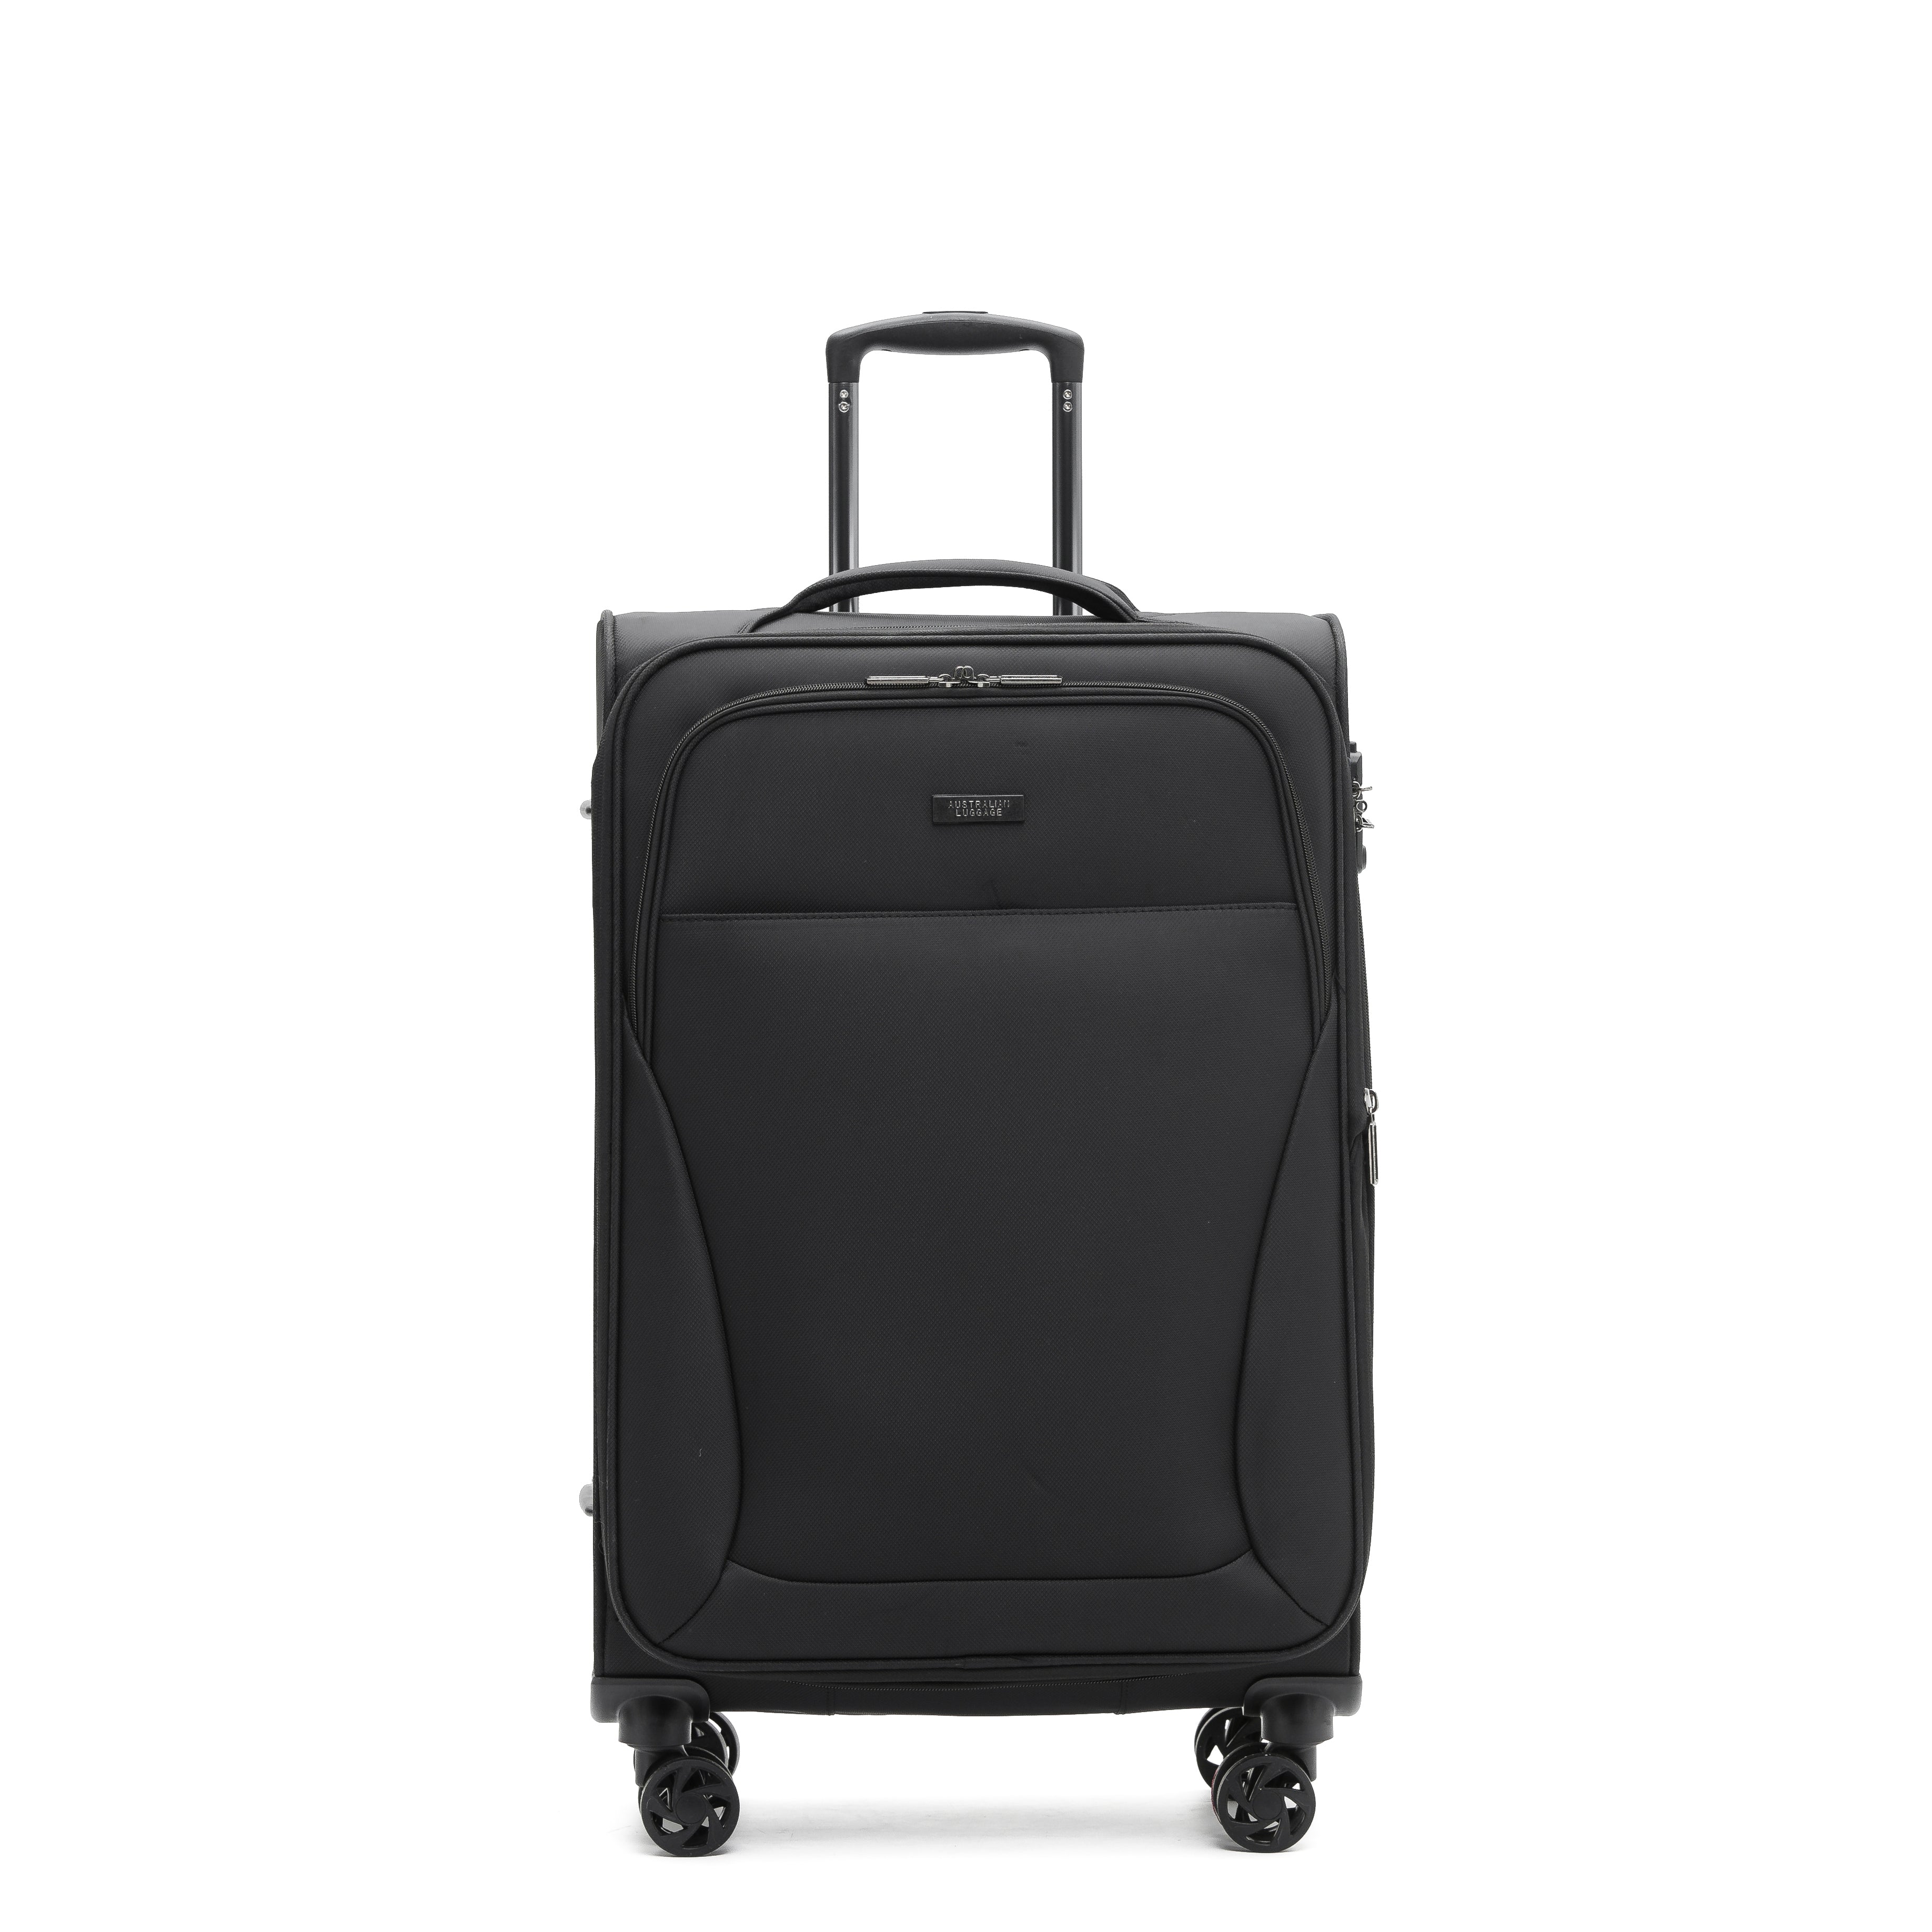 Aus Luggage - WINGS Set of 3 Suitcases - Black-5